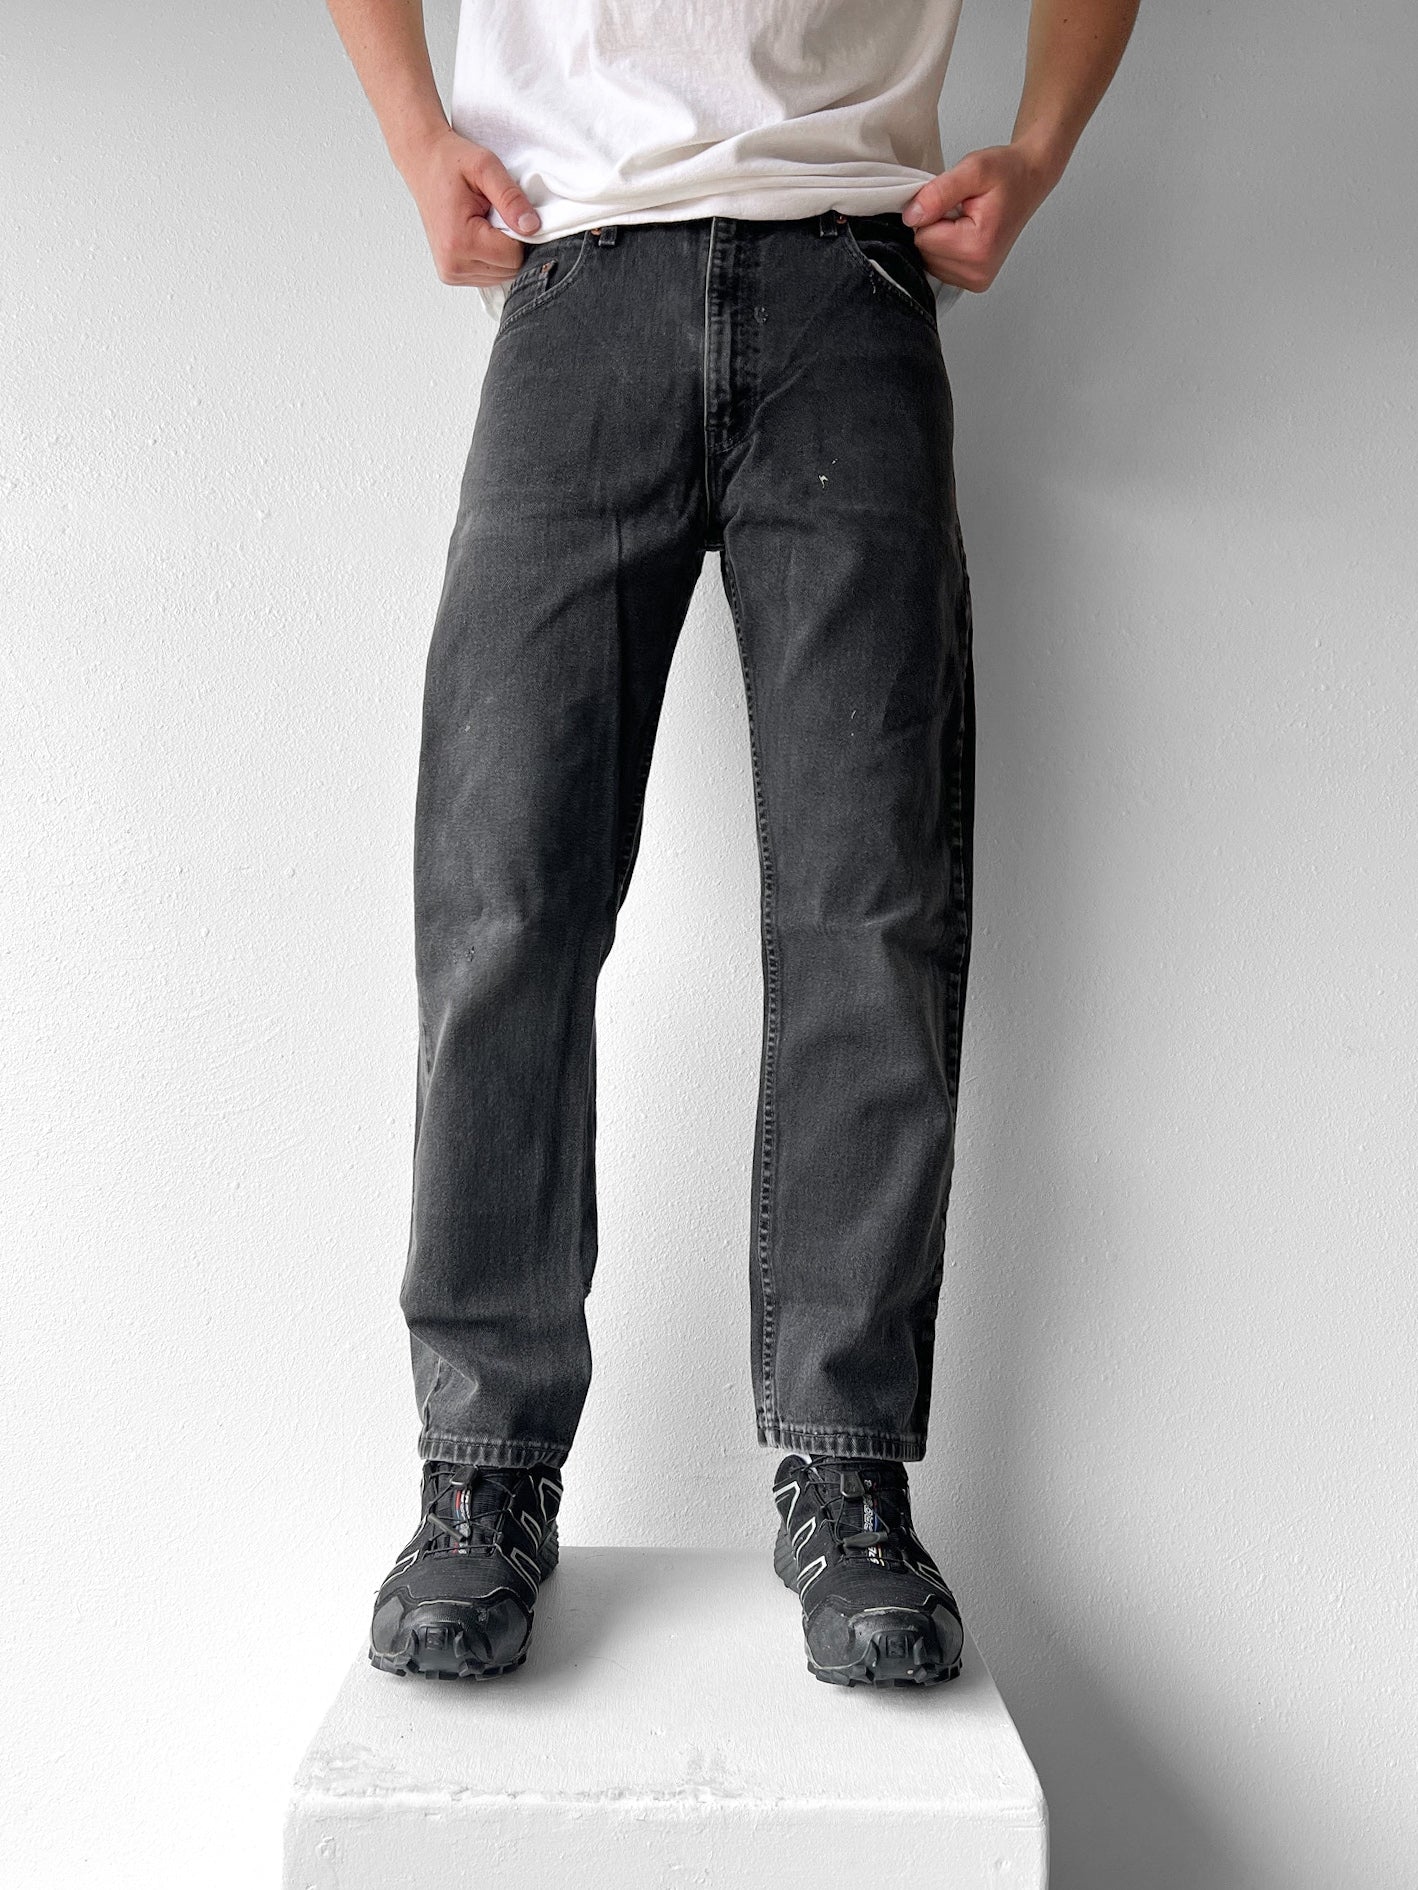 Levi’s 505 Faded Black Jeans - 34 x 30